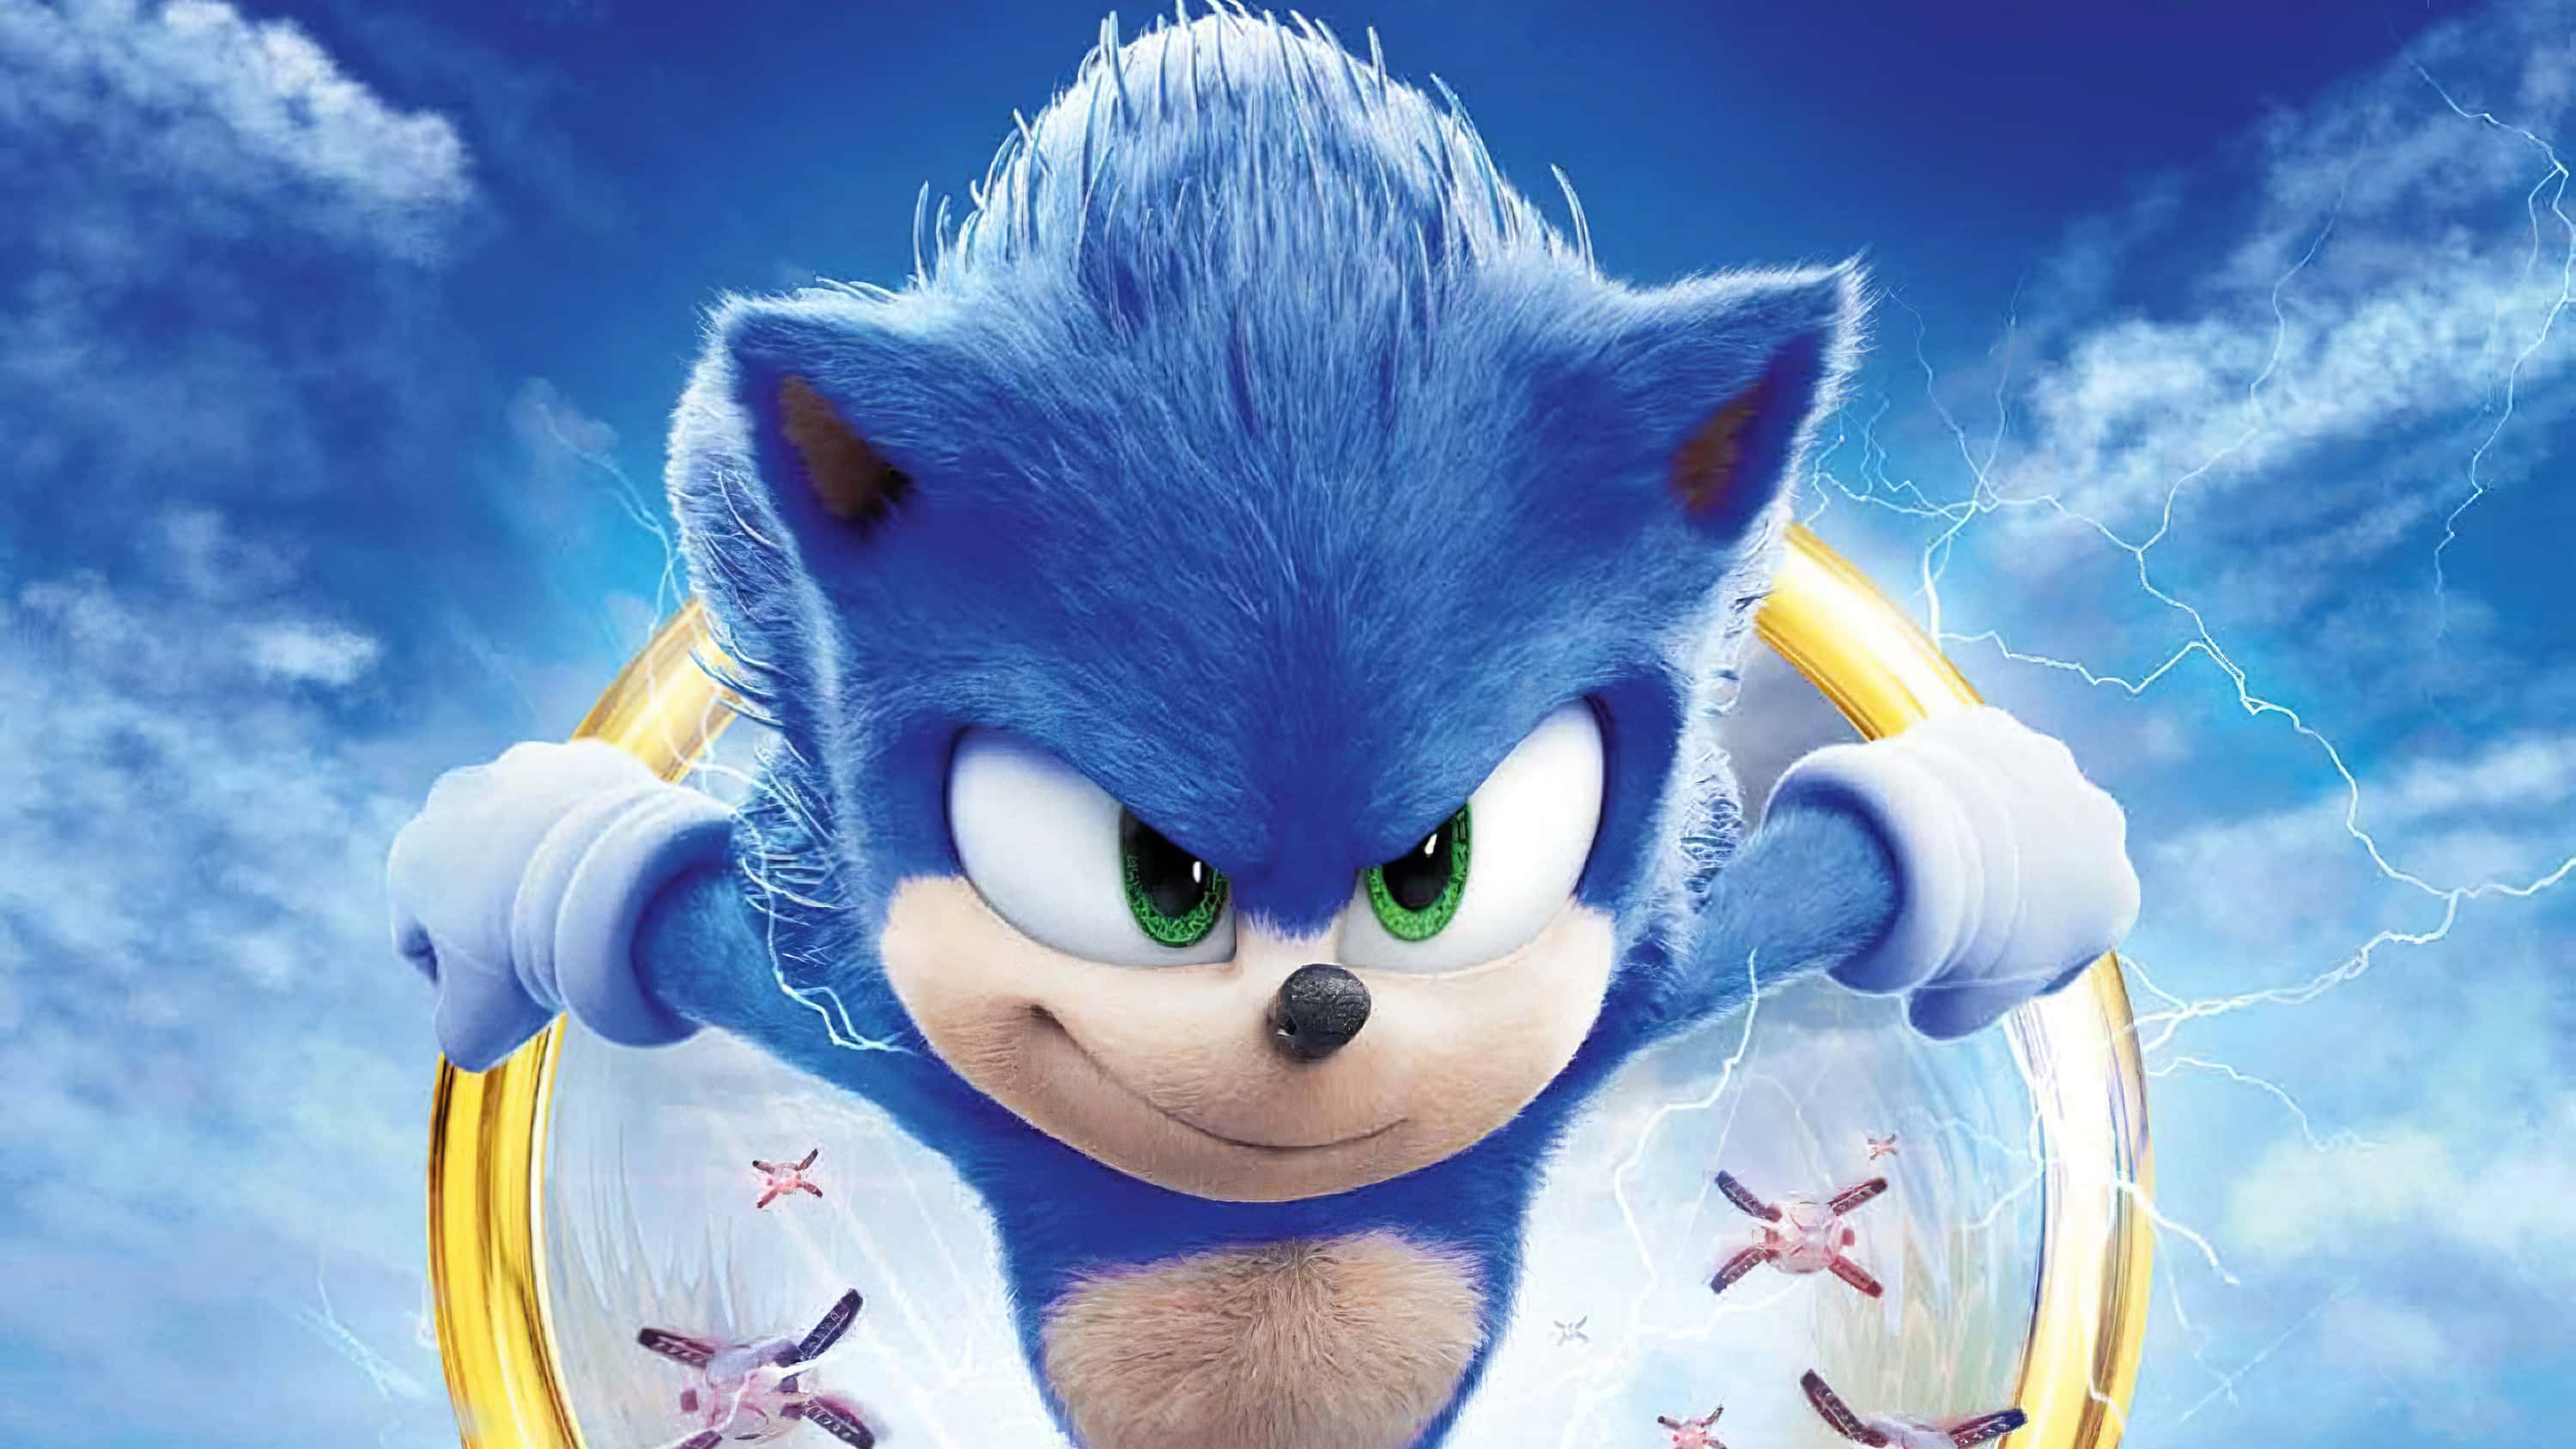 Hintergrundbildvon Sonic The Hedgehog